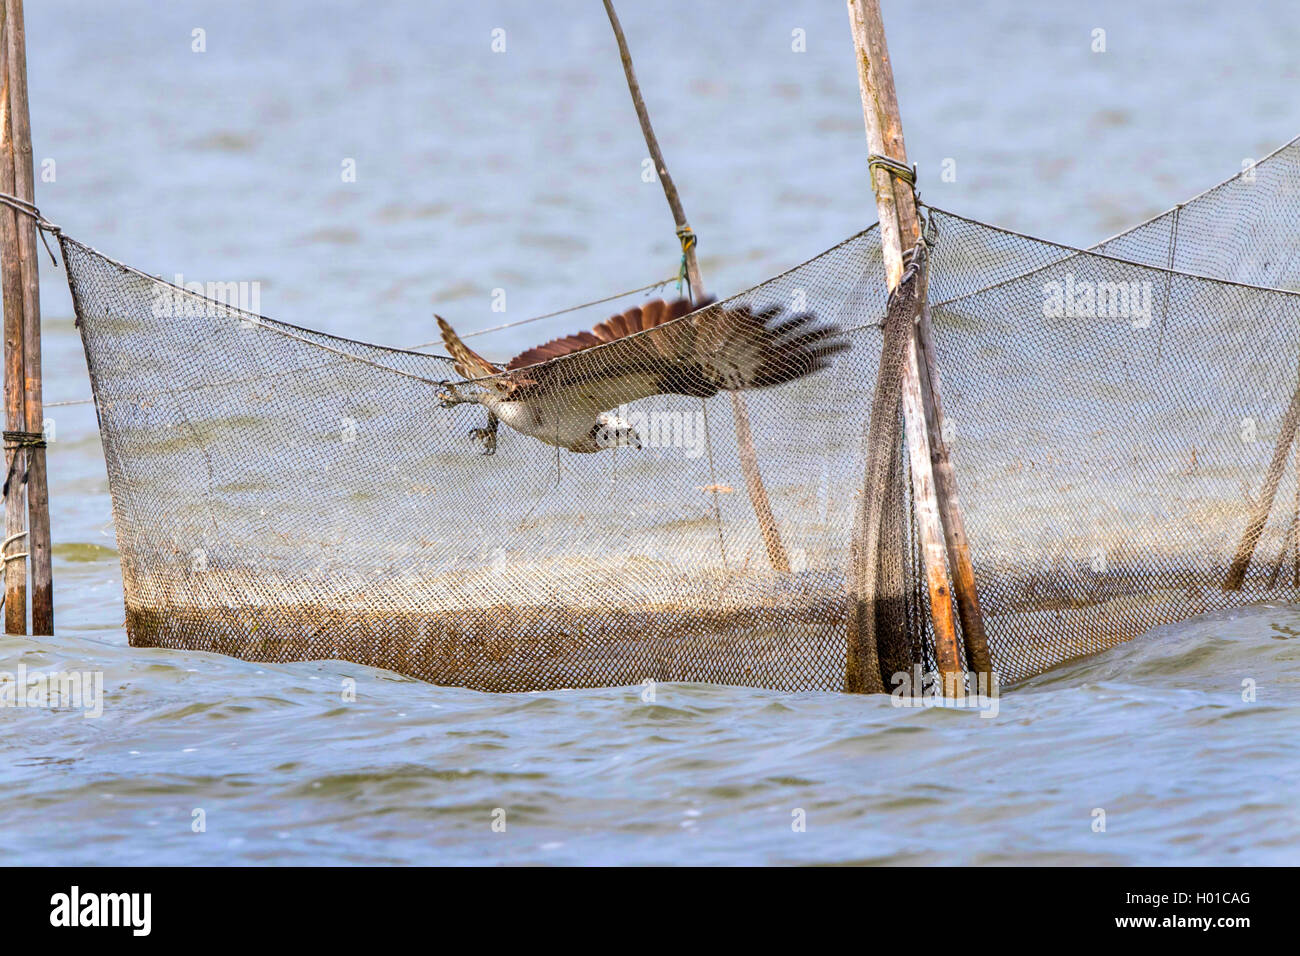 https://c8.alamy.com/comp/H01CAG/osprey-fish-hawk-pandion-haliaetus-osprey-tries-to-catch-a-fish-in-H01CAG.jpg